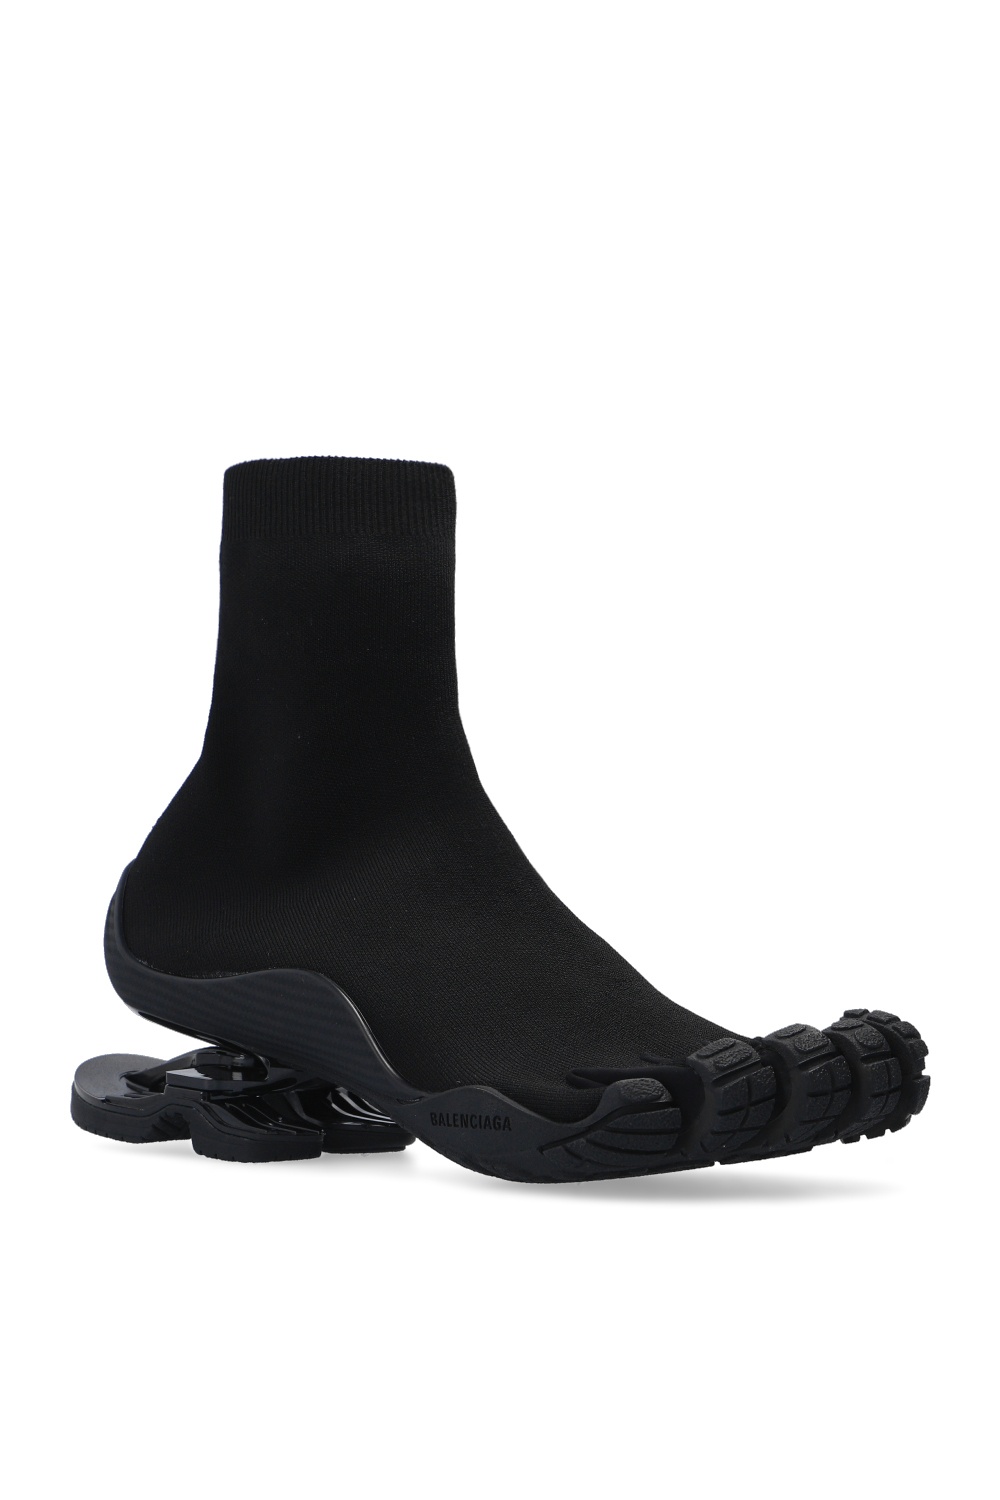 balenciaga sock sneakers black